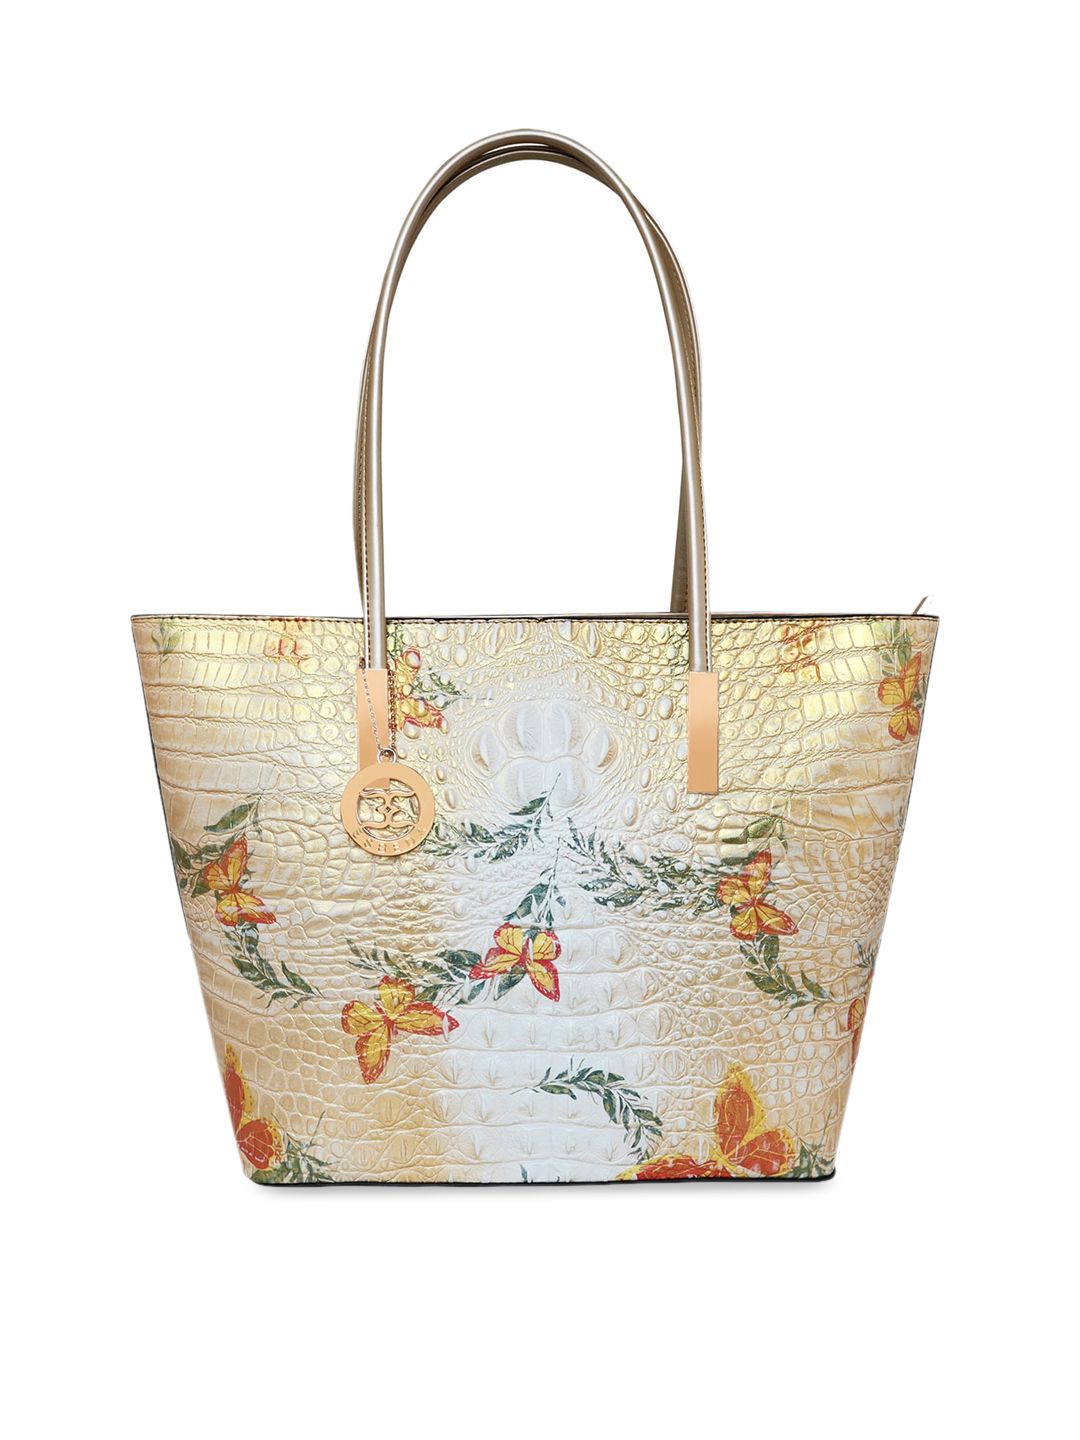 ESBEDA Gold-Toned Floral Printed PU Structured Shoulder Bag Price in India